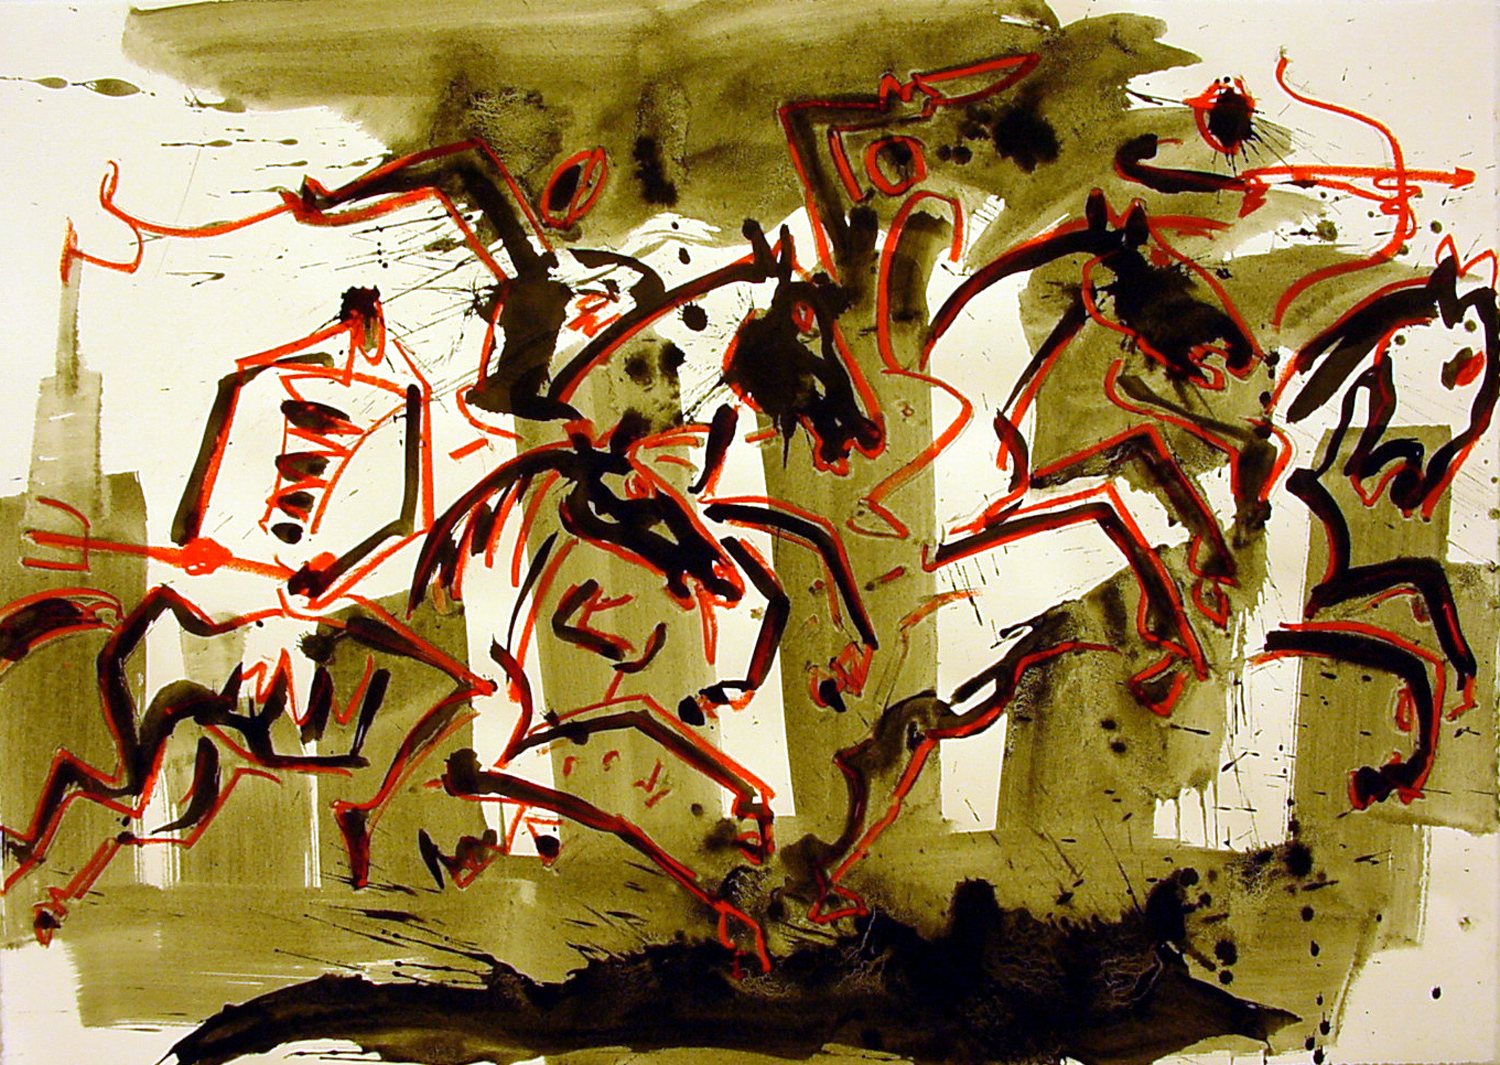 Krieg, 2001, 76 x 108 cm